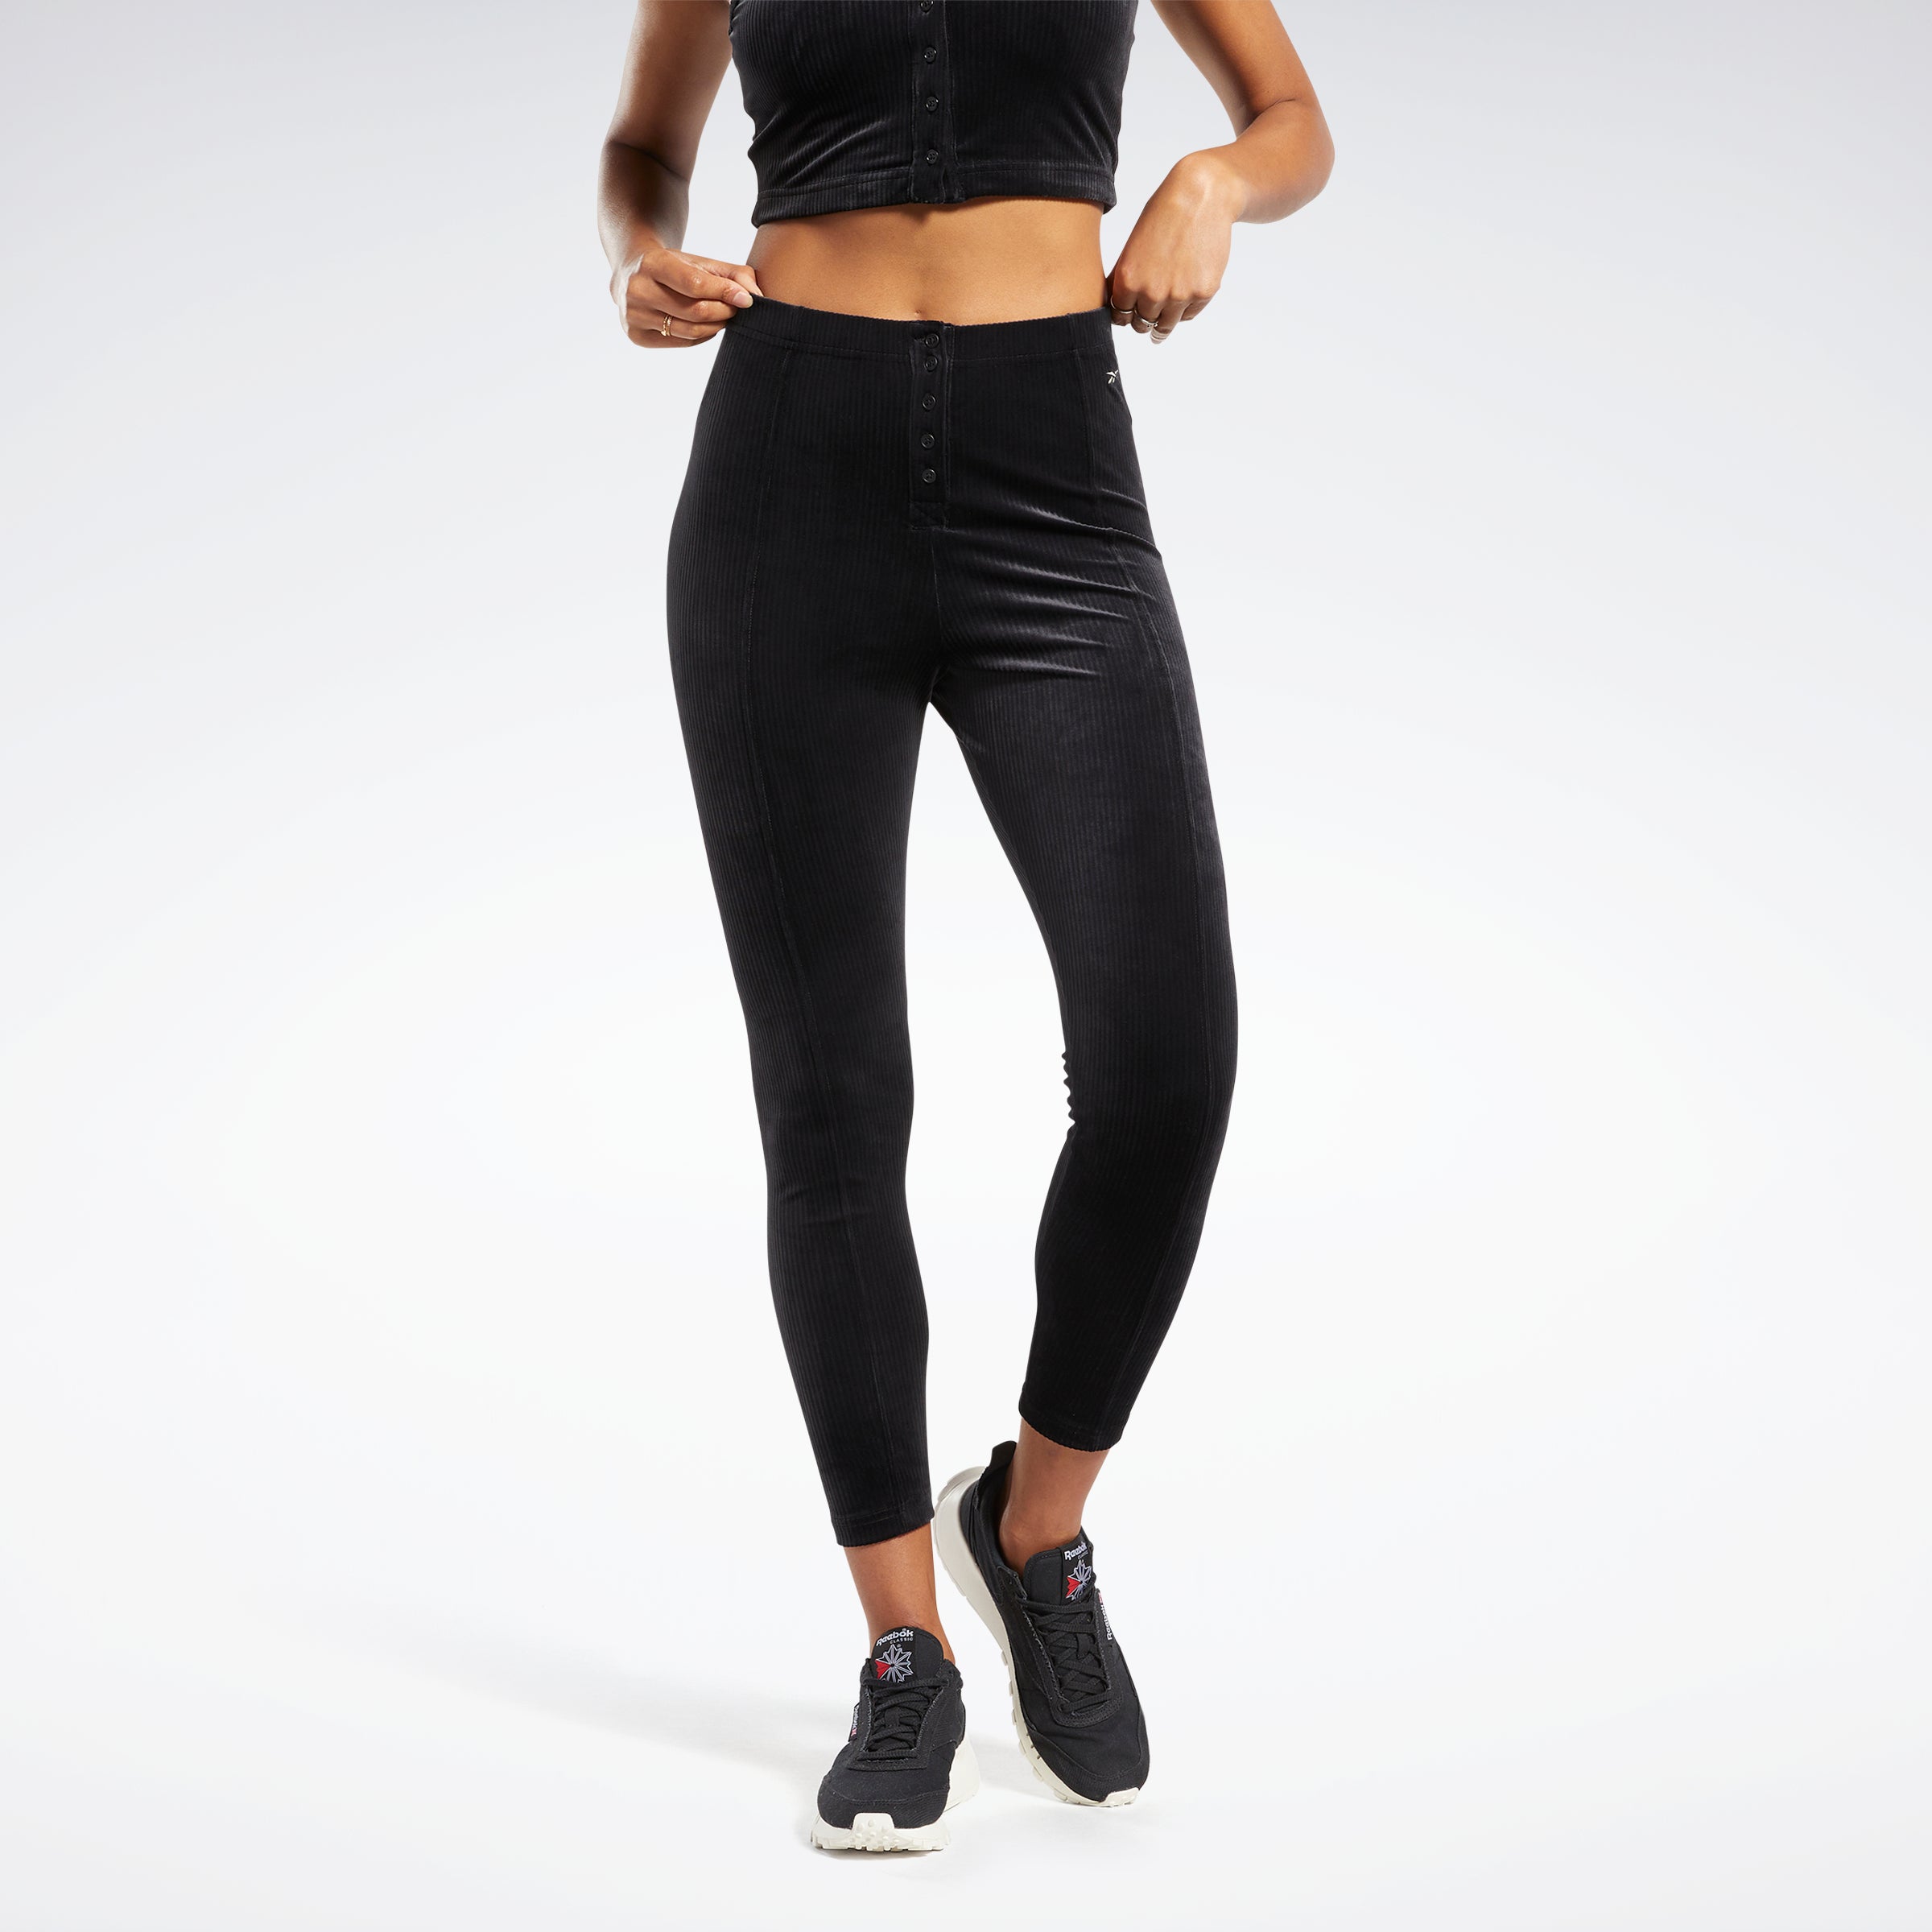 Reebok Running Printed Capri Tights Womens Athletic Leggings X Small Black